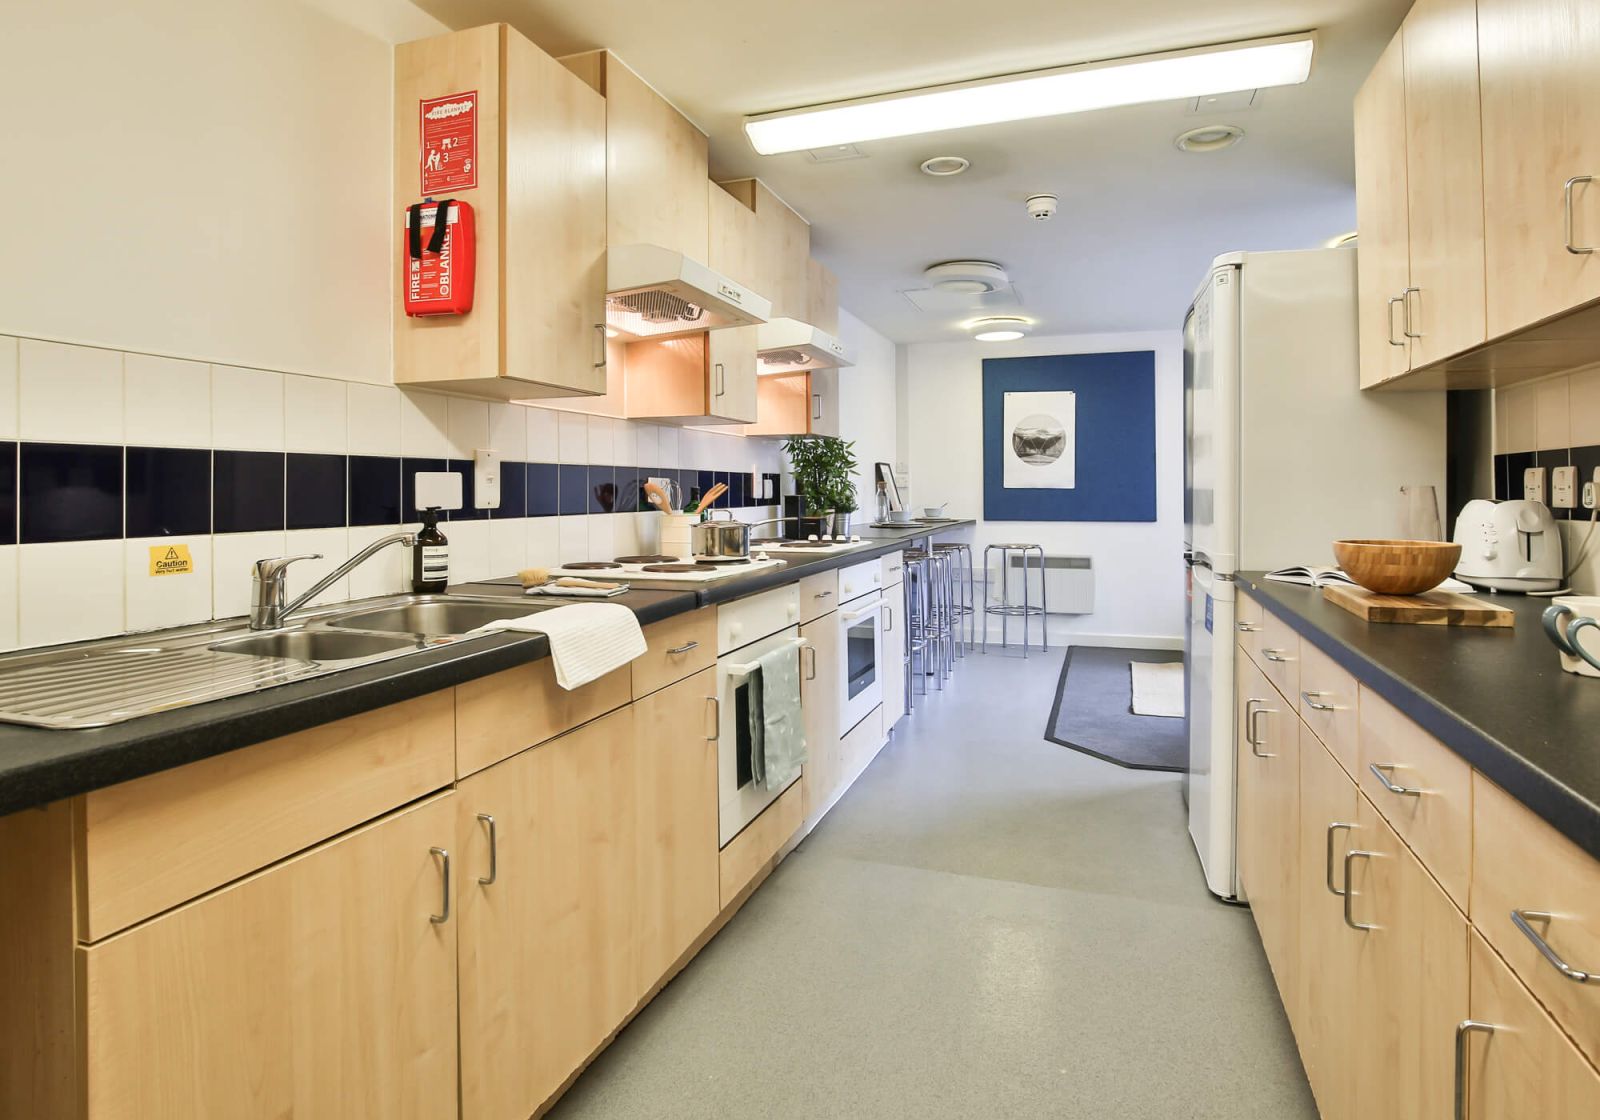 Shared kitchen & living area (Medium layout)